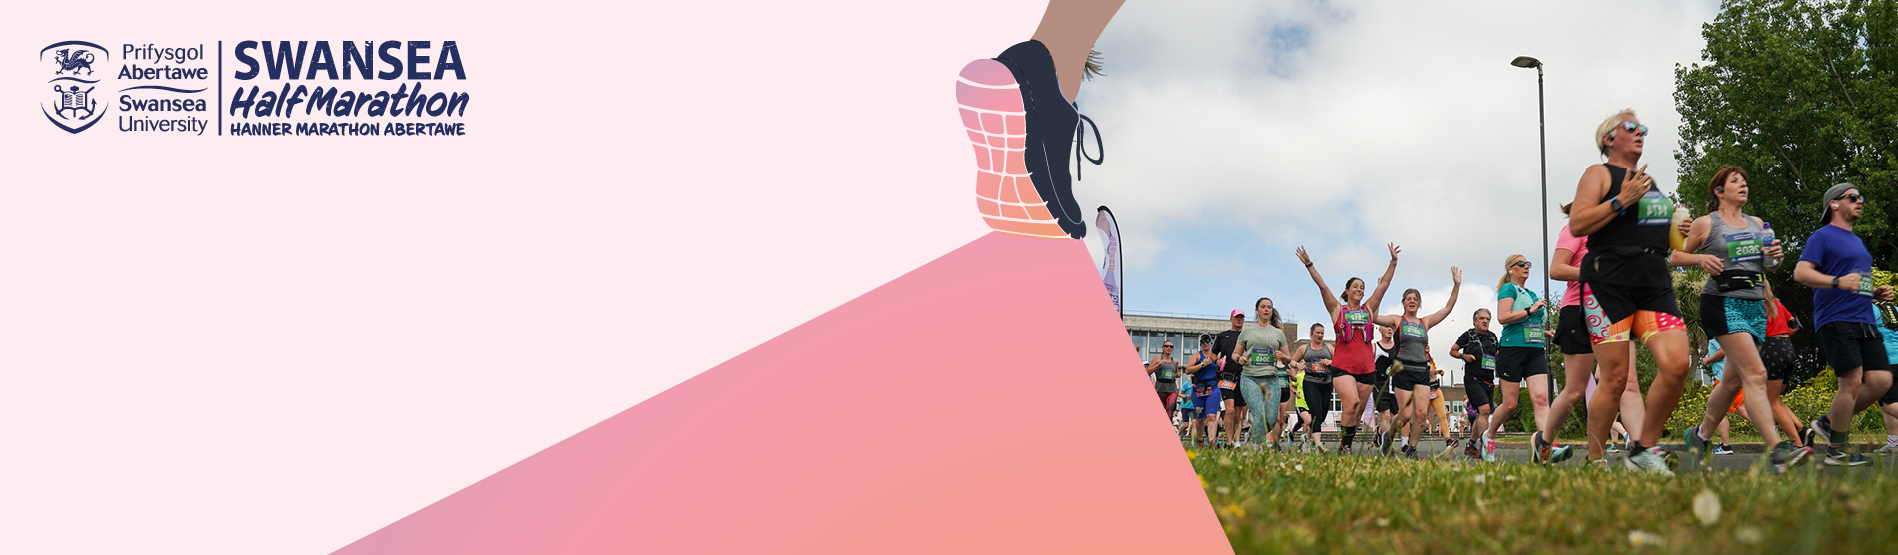 Swansea Half Marathon. Graphic of runner's foot and image of marathon runners